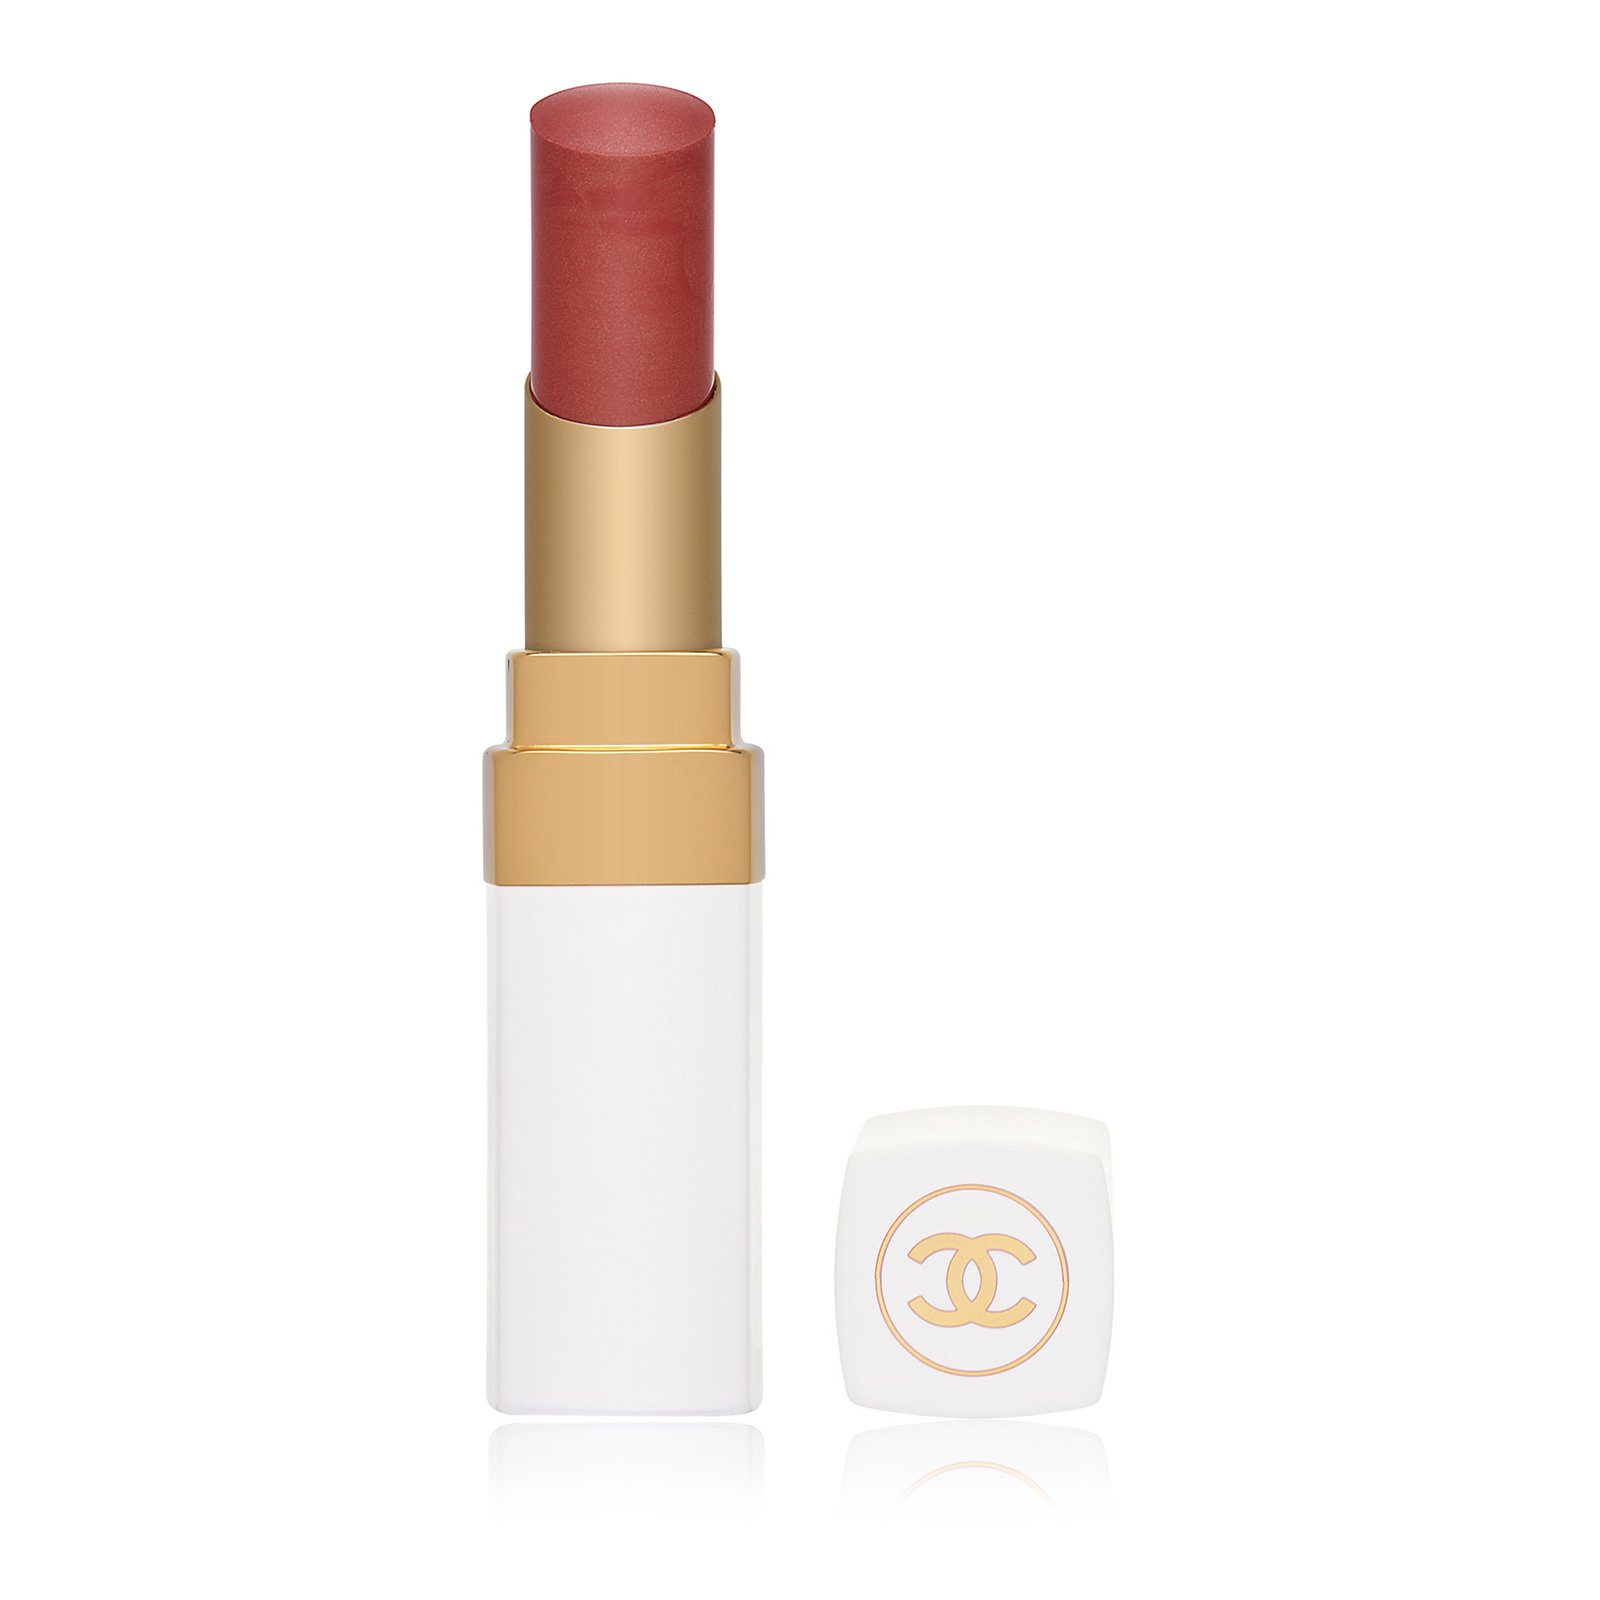 chanel 914 lipstick